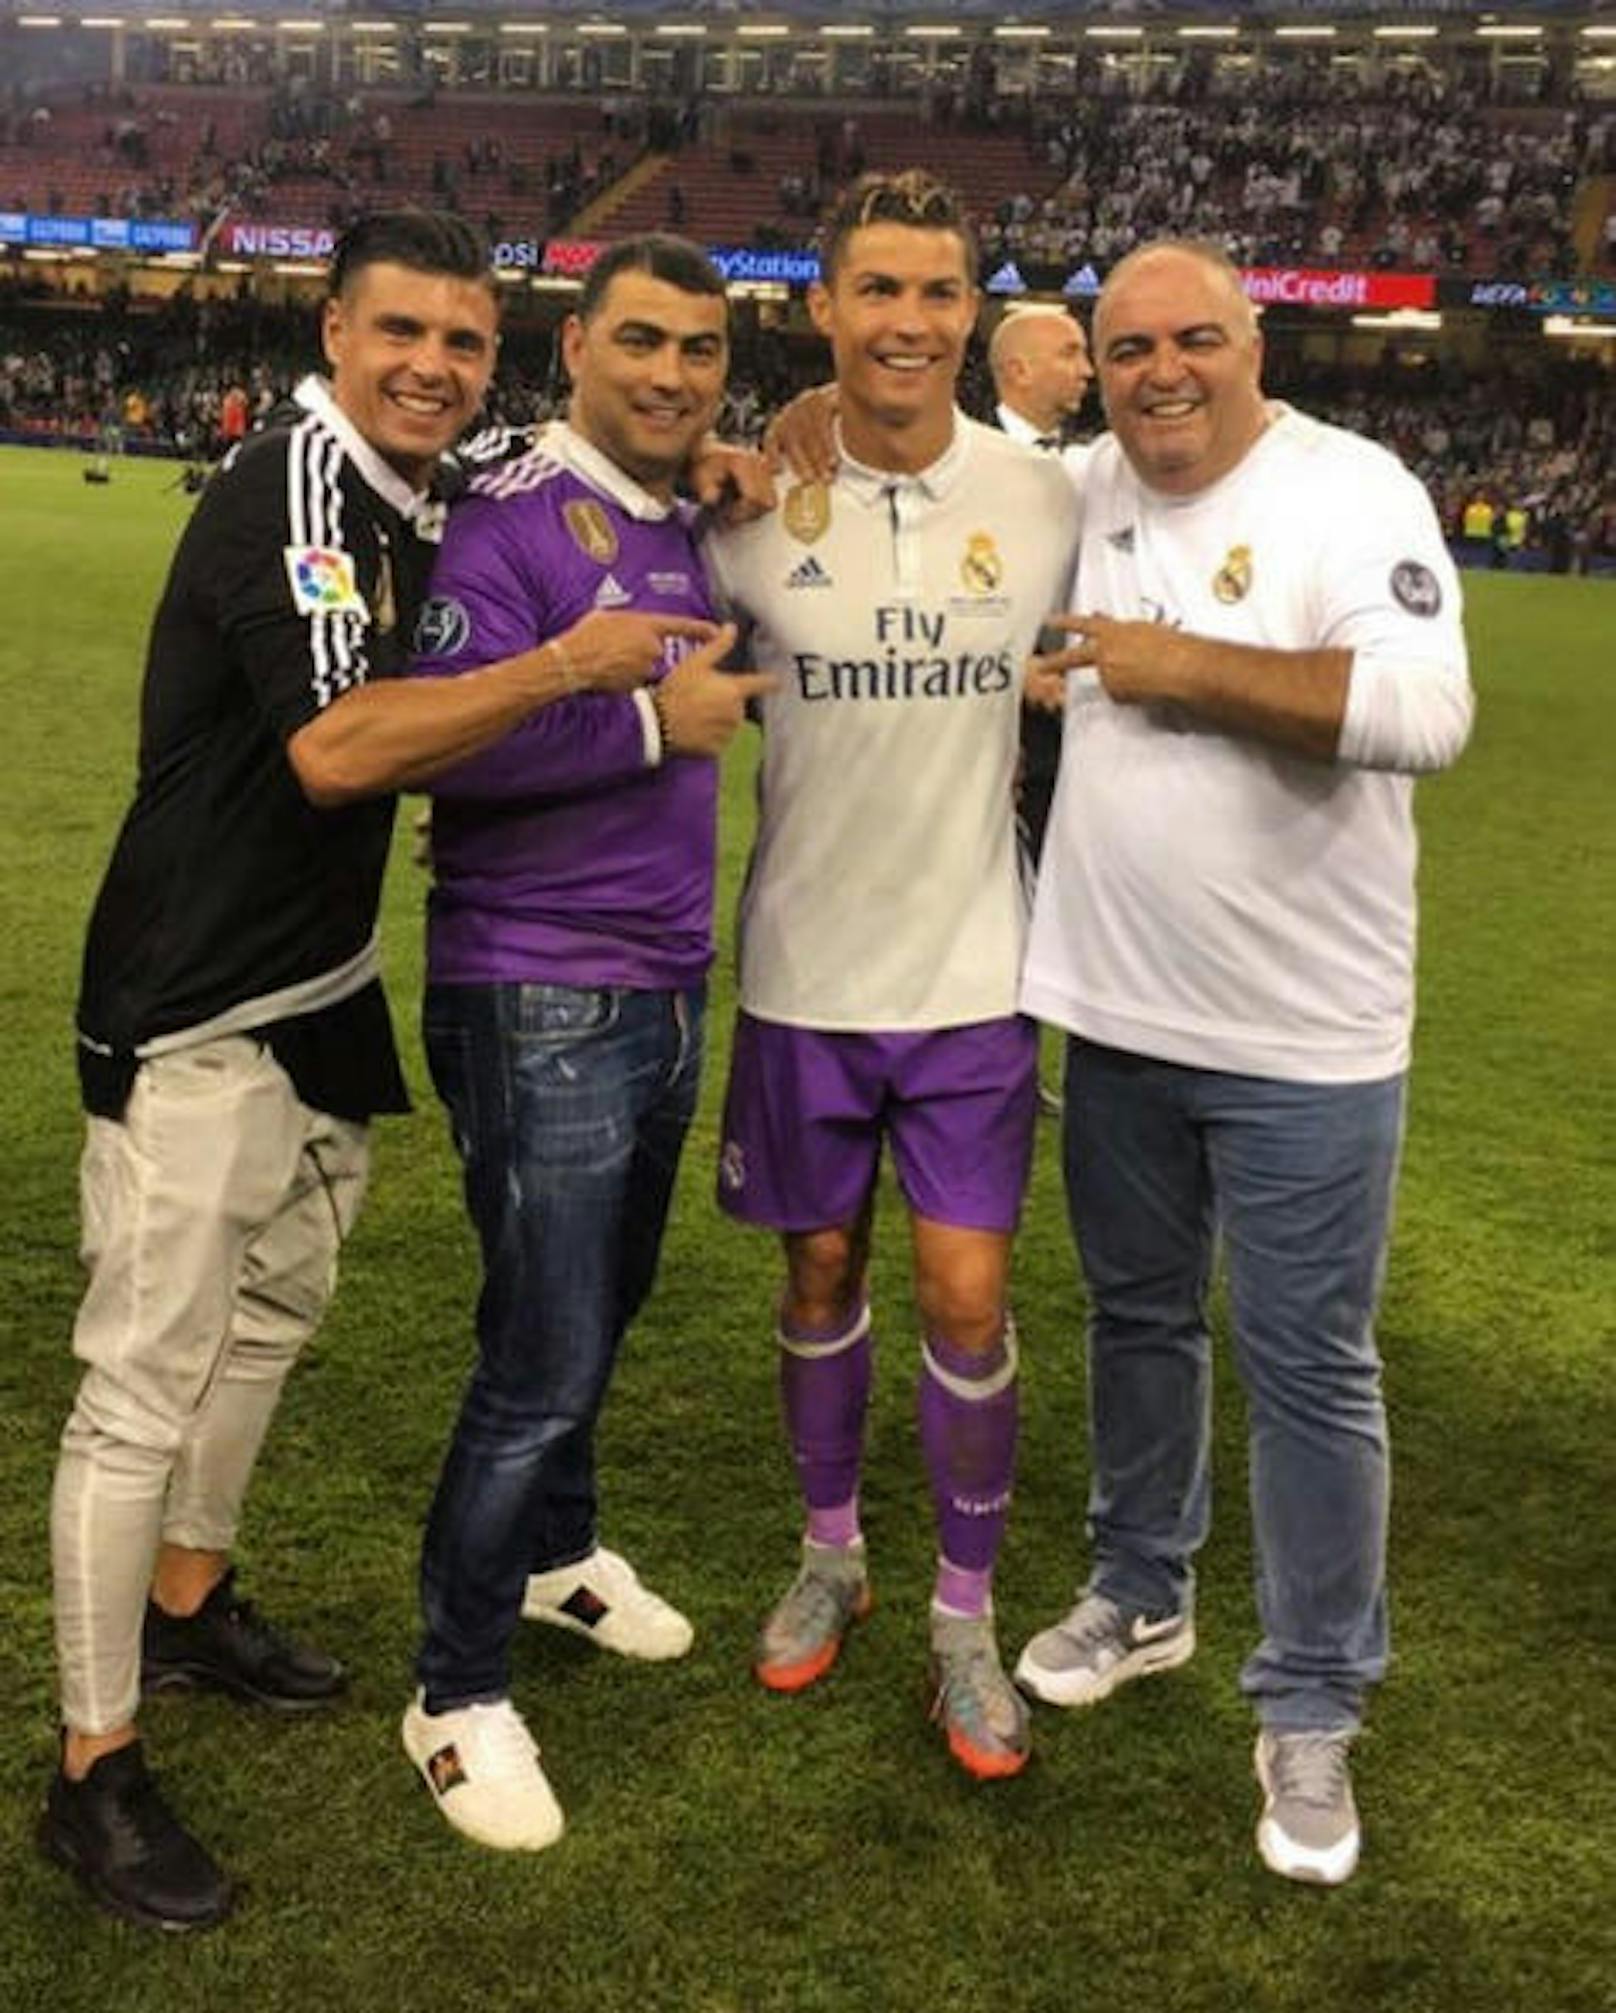 "Family" - so betitelte Ronaldo dieses Foto auf Instagram.